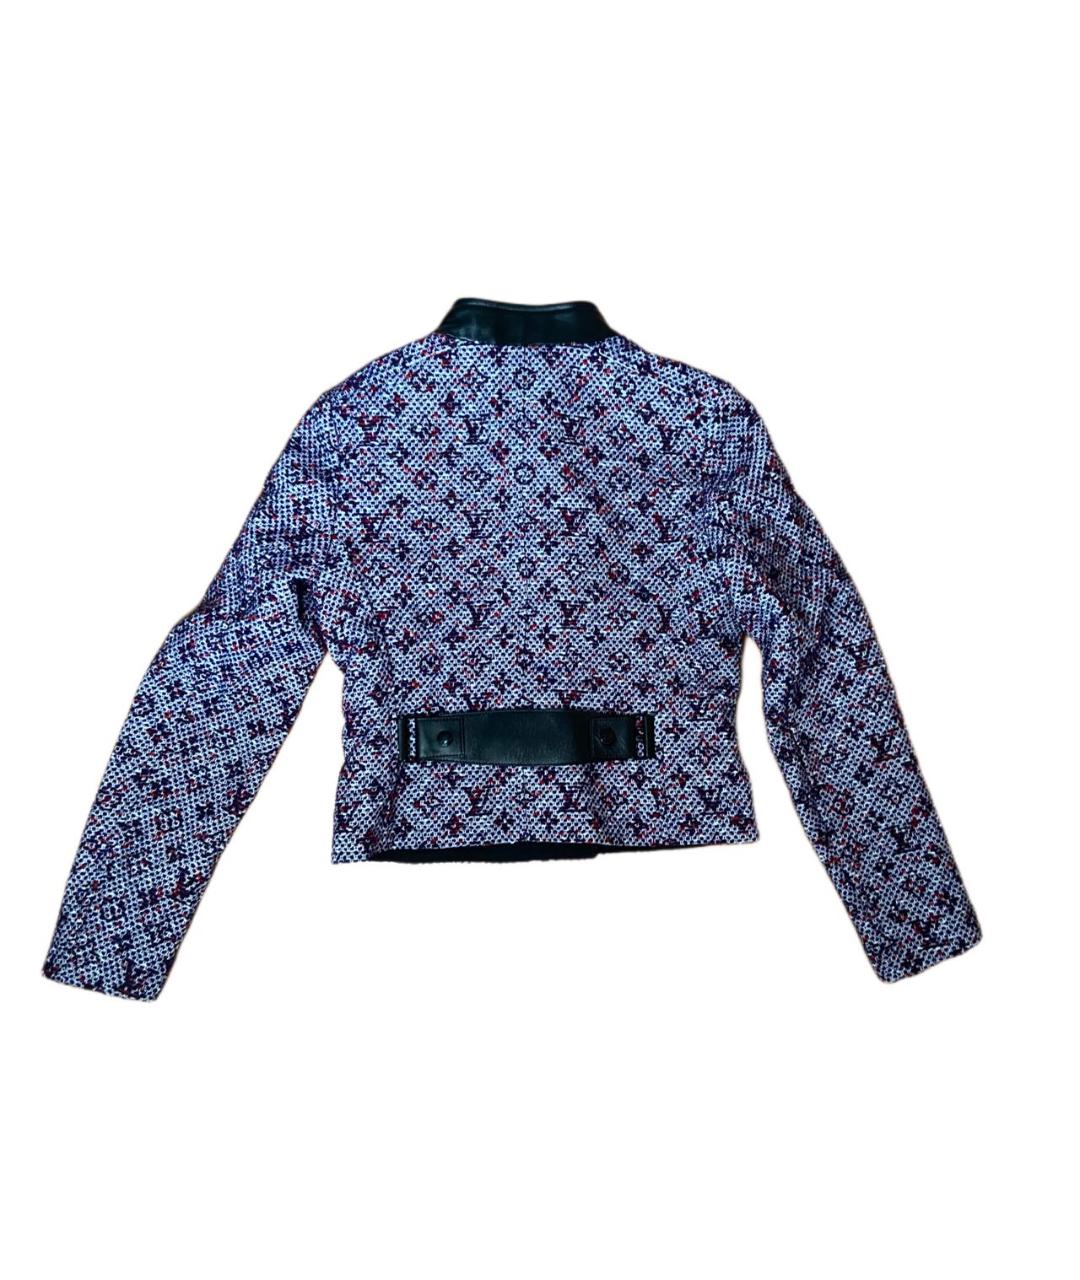 LOUIS VUITTON PRE-OWNED Темно-синий твидовый жакет/пиджак, фото 2